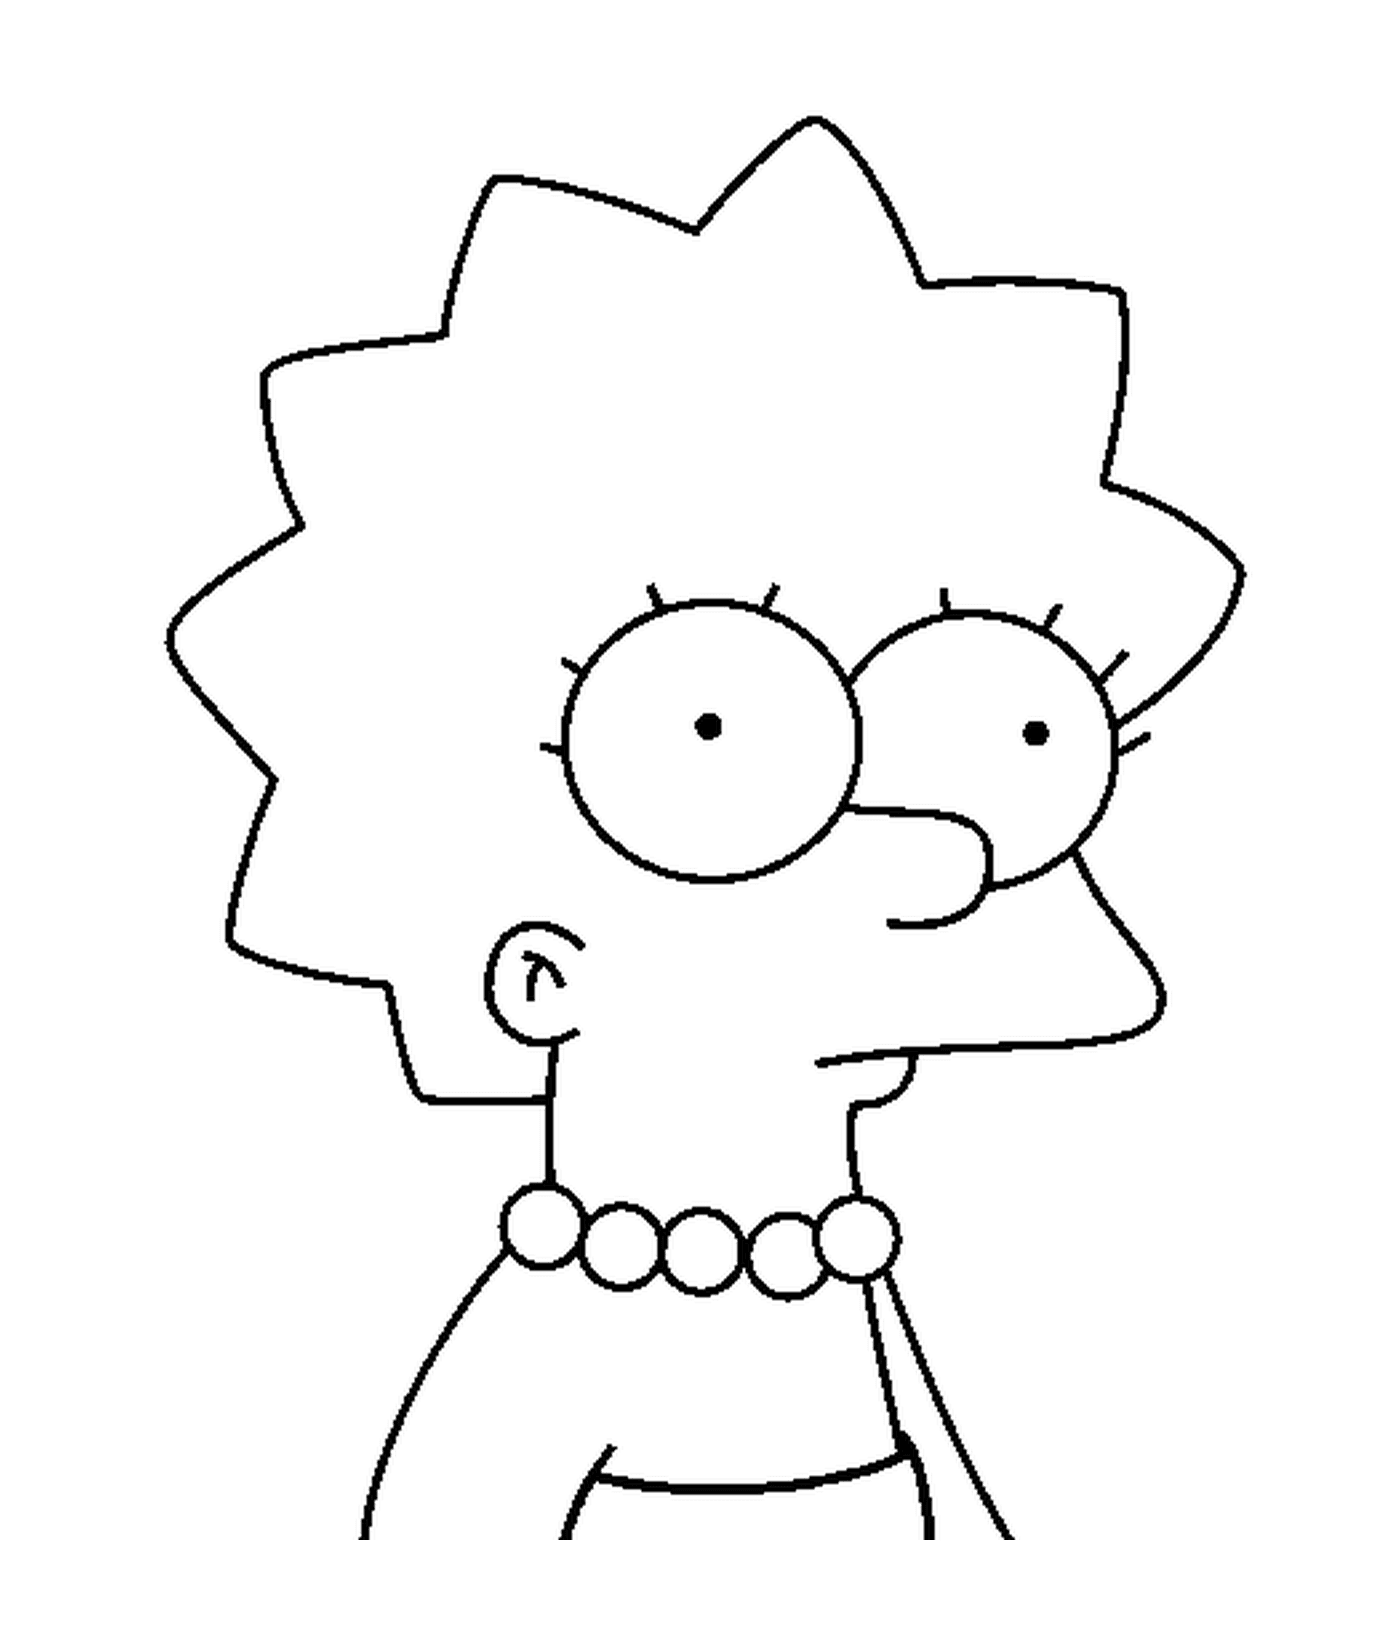  Lisa Simpson com pérolas 